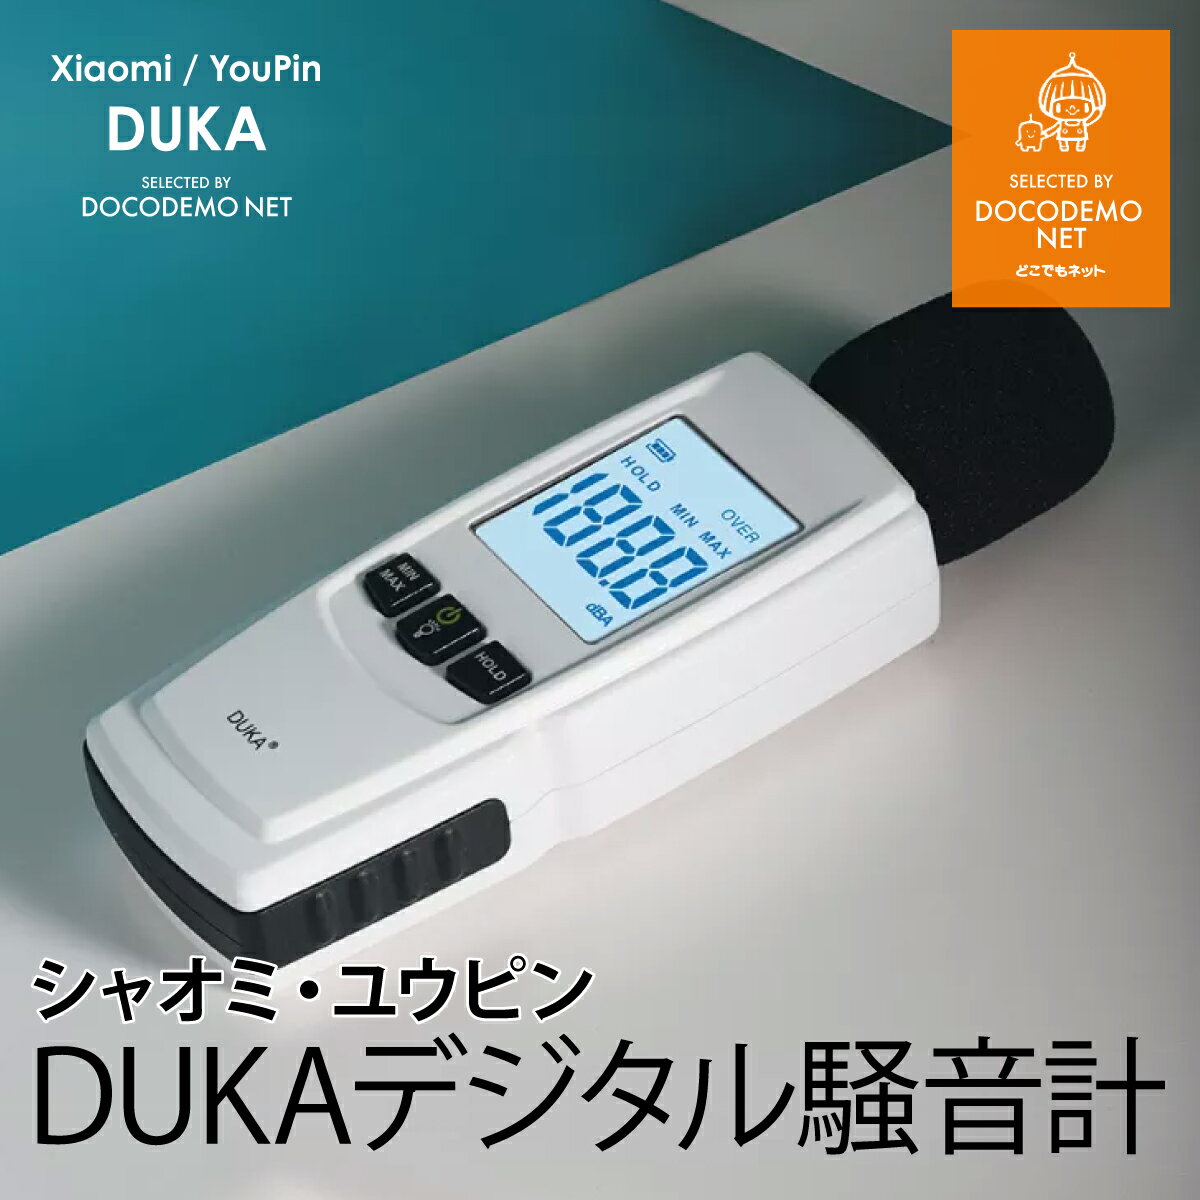 XIAOMI YOUPIN DUKA 騒音計 デジタル騒音計 携帯型騒音測定計 バックライト搭載 ポータブル 軽量 コンパクト 並行輸入品